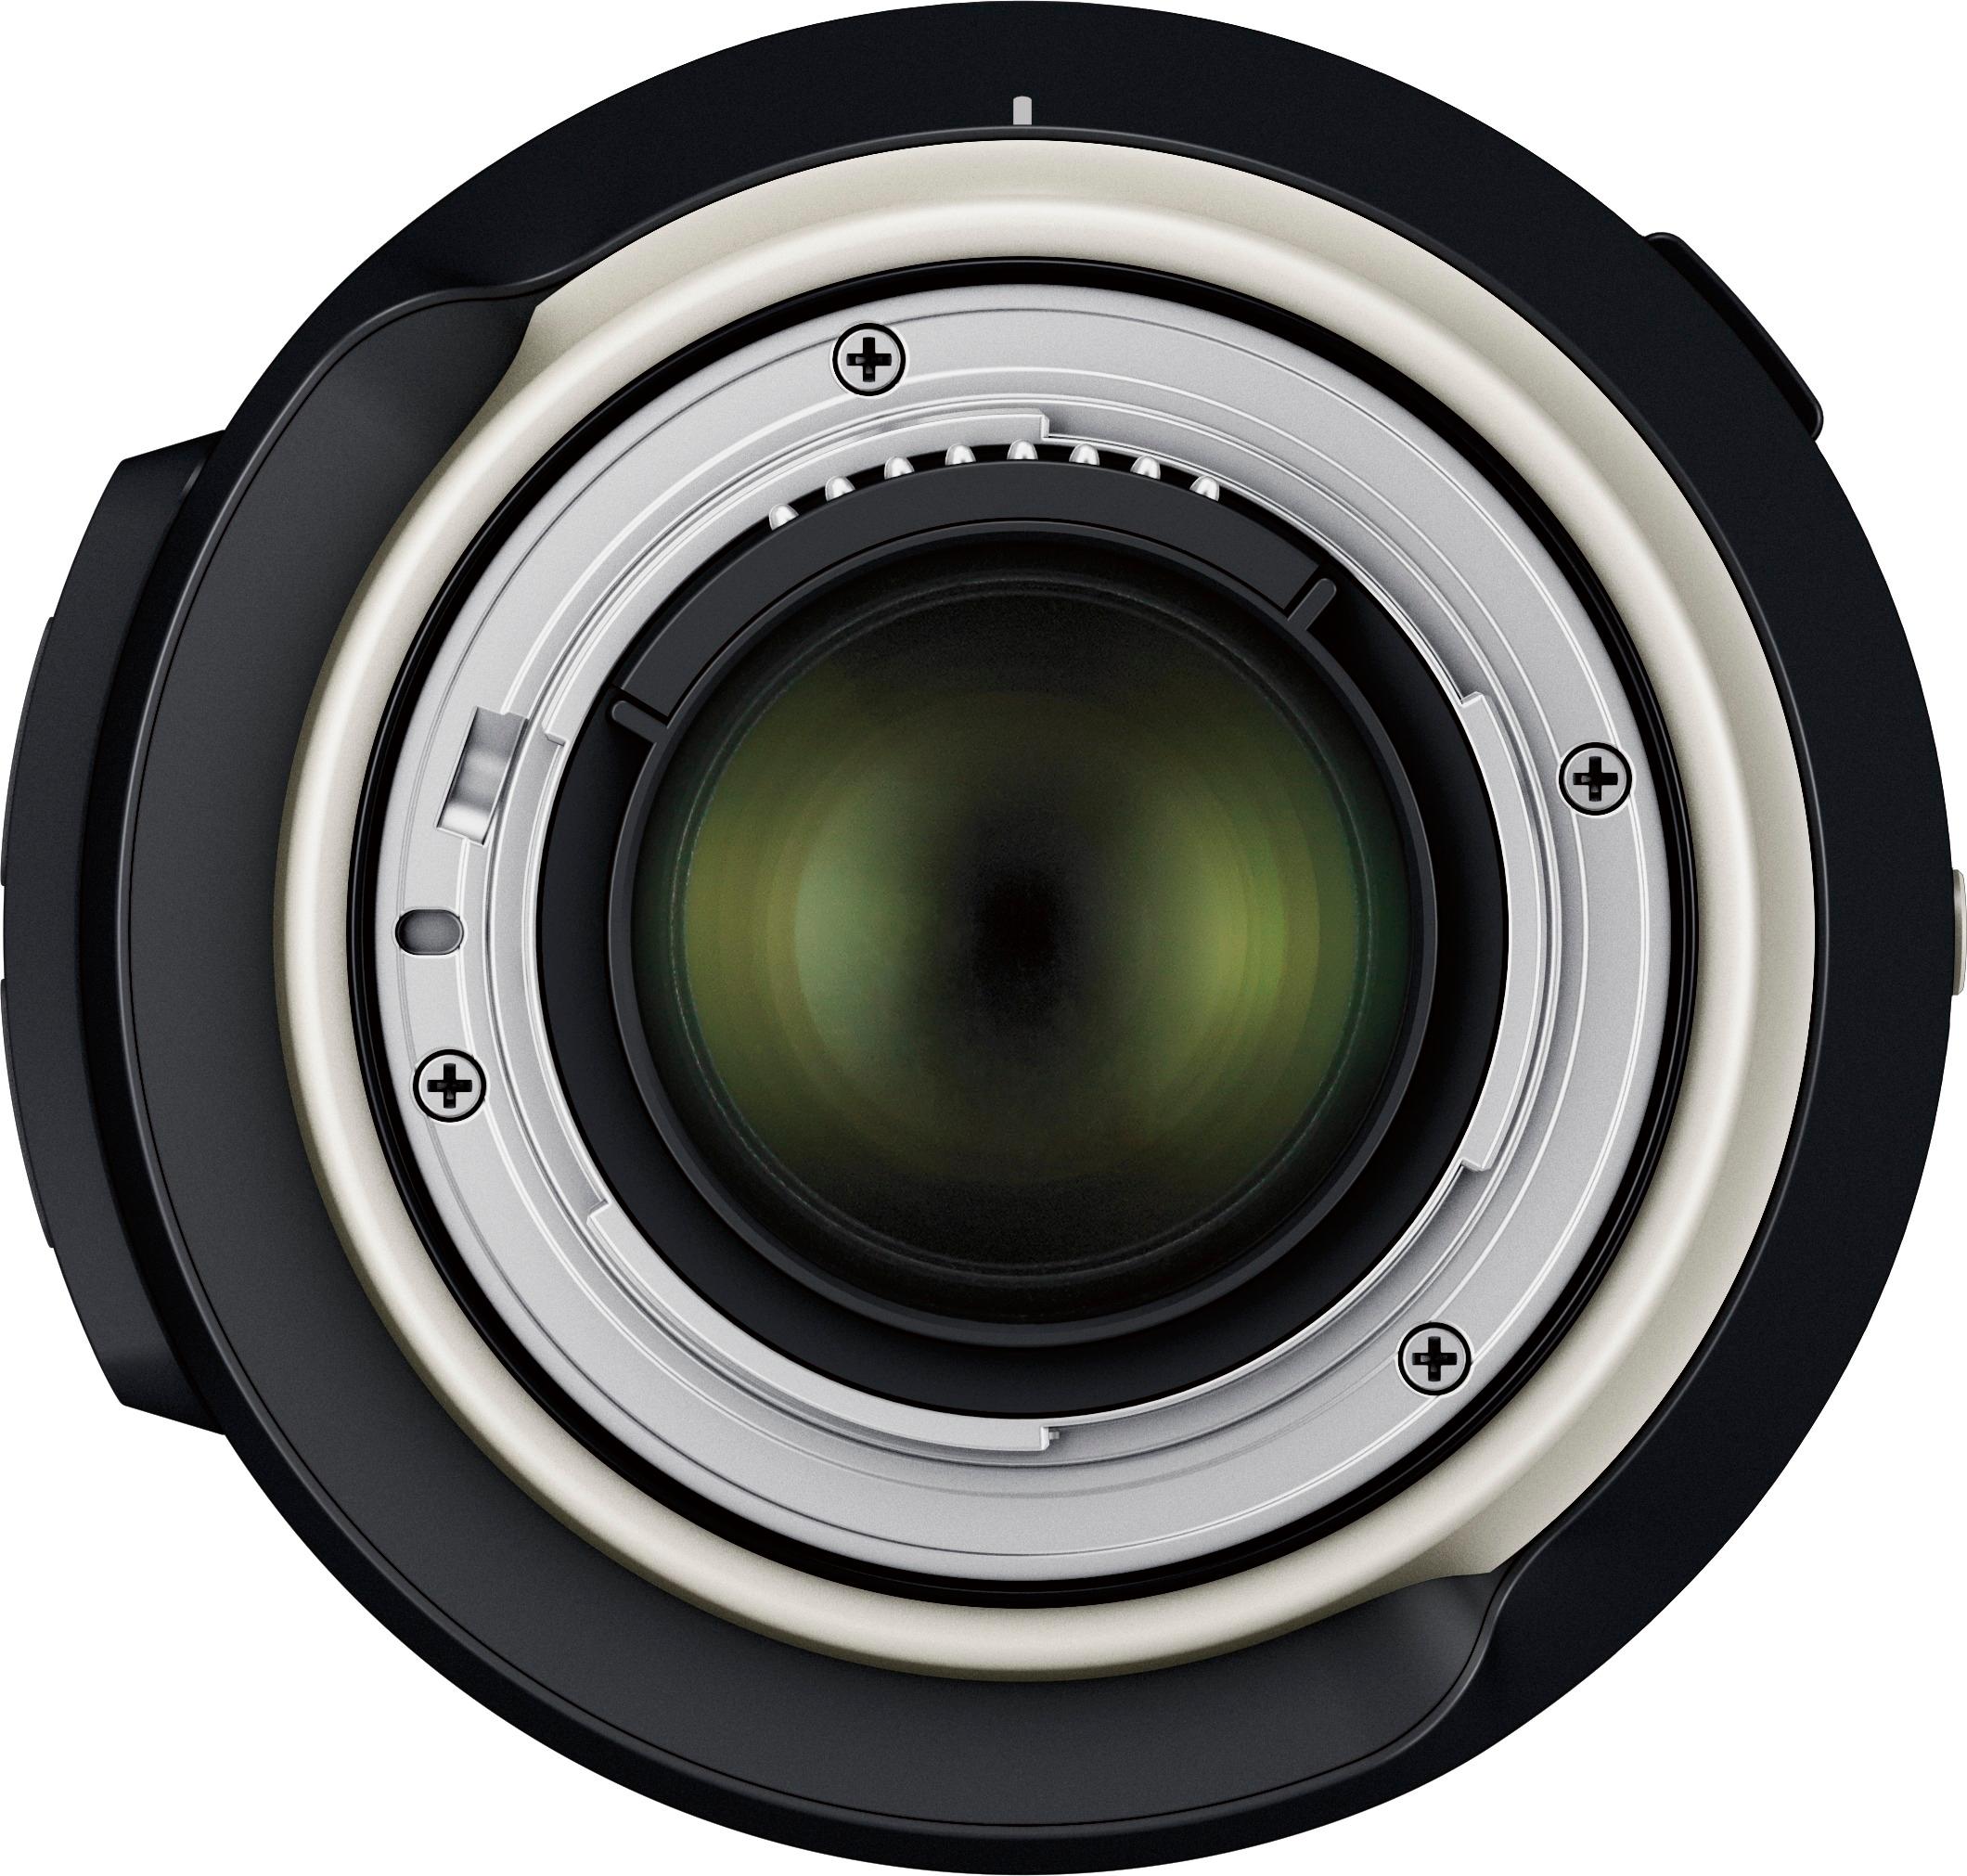 Tamron SP 24-70mm F/2.8 Di VC USD G2 Zoom Lens for Nikon DSLR cameras black  AFA032N700 - Best Buy